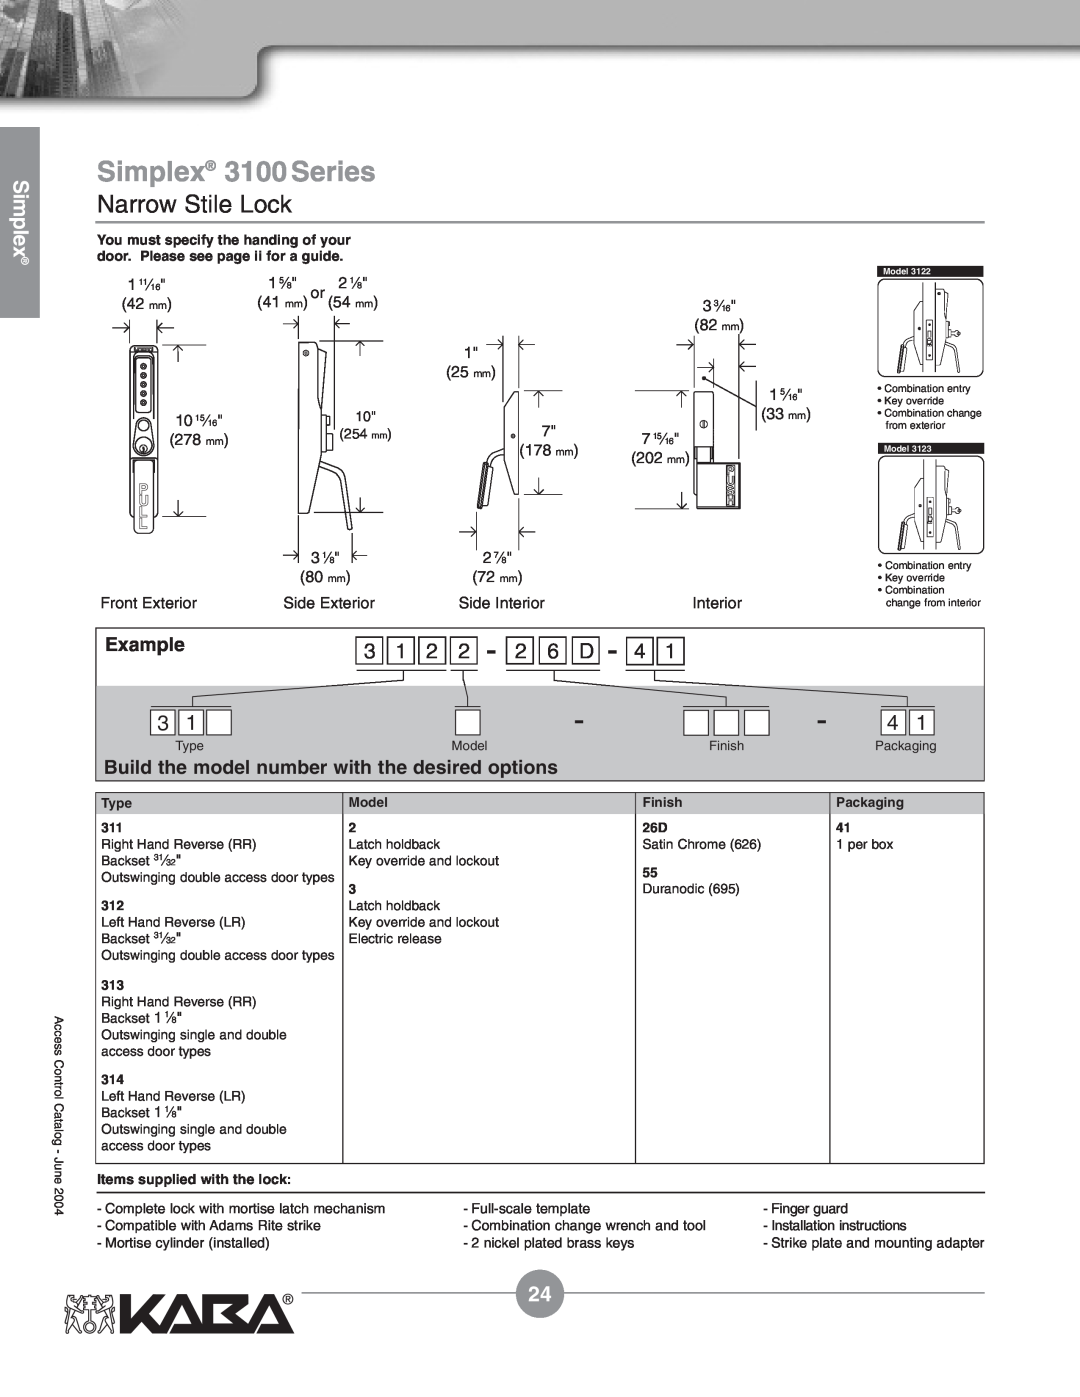 Assa Mechanical Pushbutton Locks manual 1 2 2 - 2 6 D, Simplex 3100 Series, Narrow Stile Lock, Example 